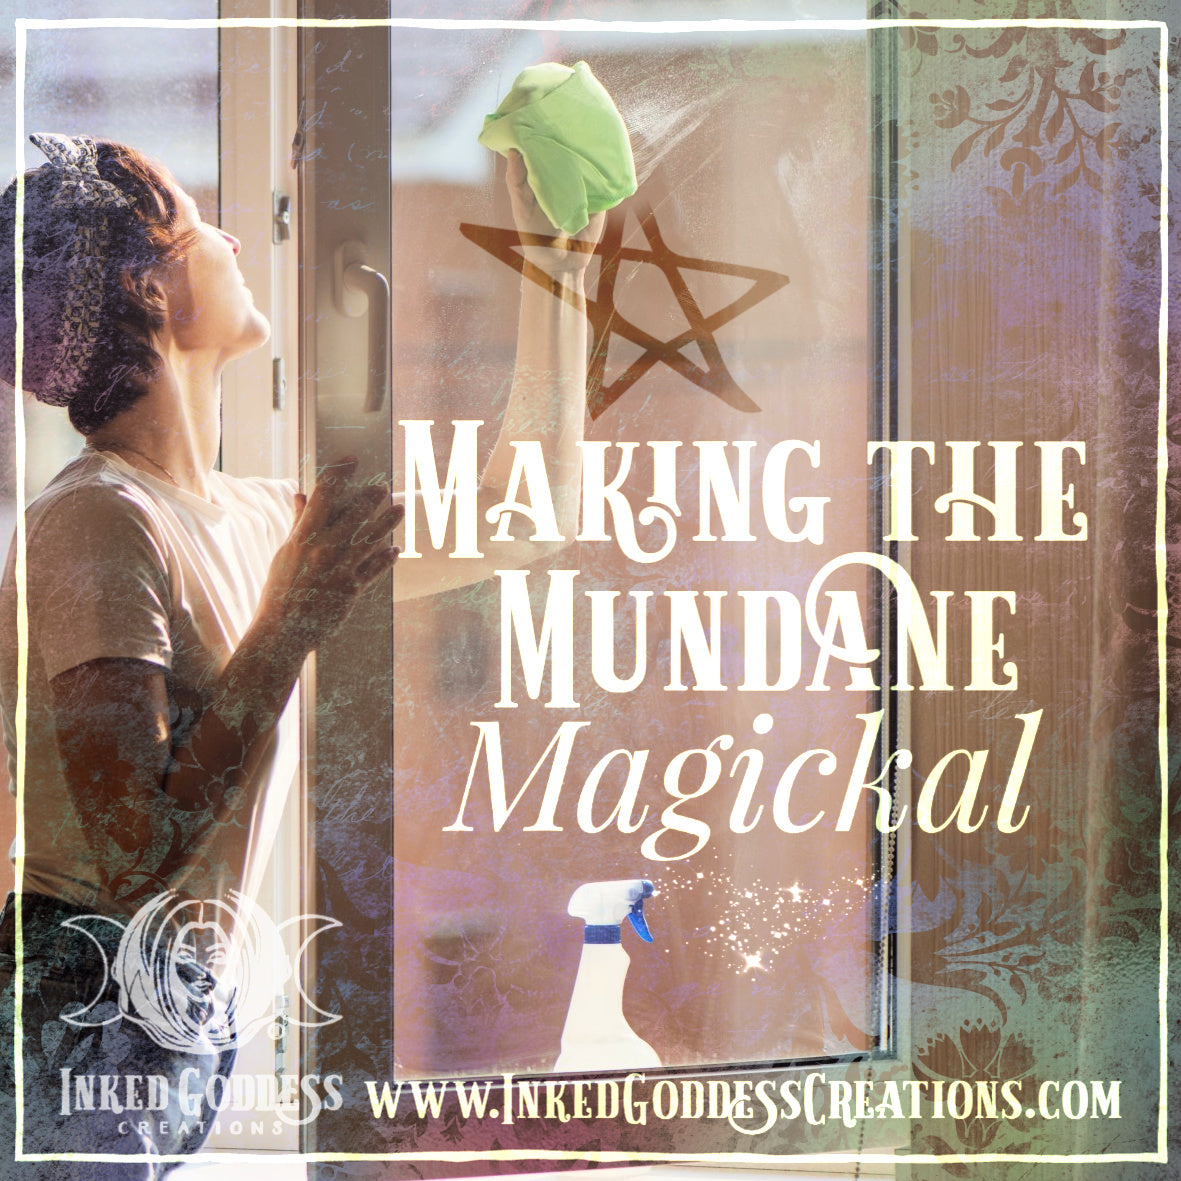 Making the Mundane Magickal